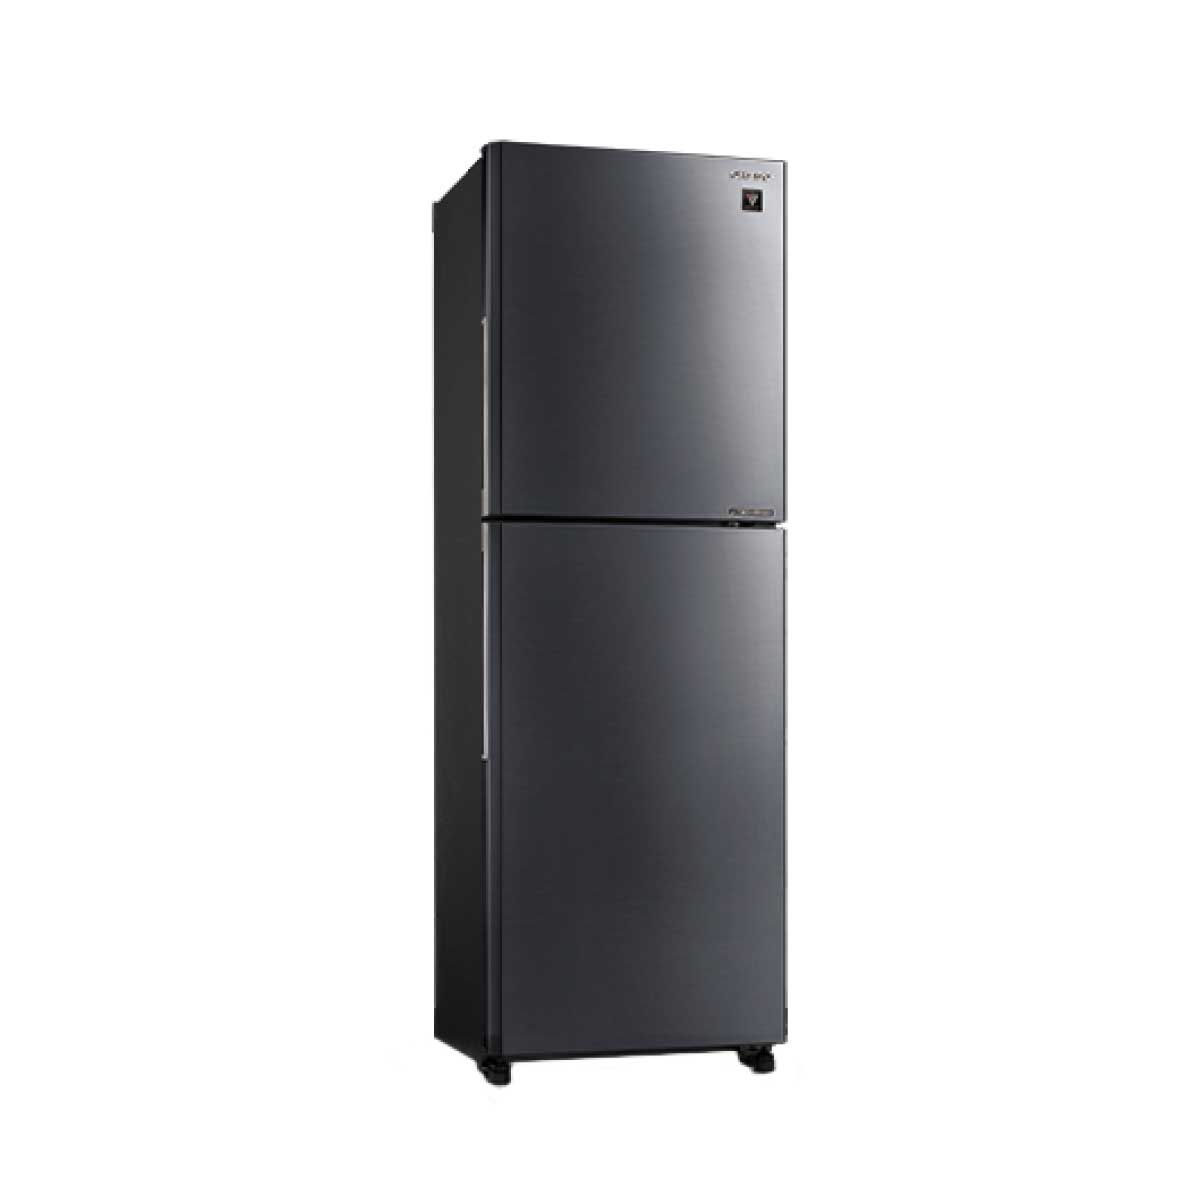 SHARP ตู้เย็น 2 ประตู PEACH SERIES 7.9 คิว Inverter รุ่น SJ-XP230T-DK